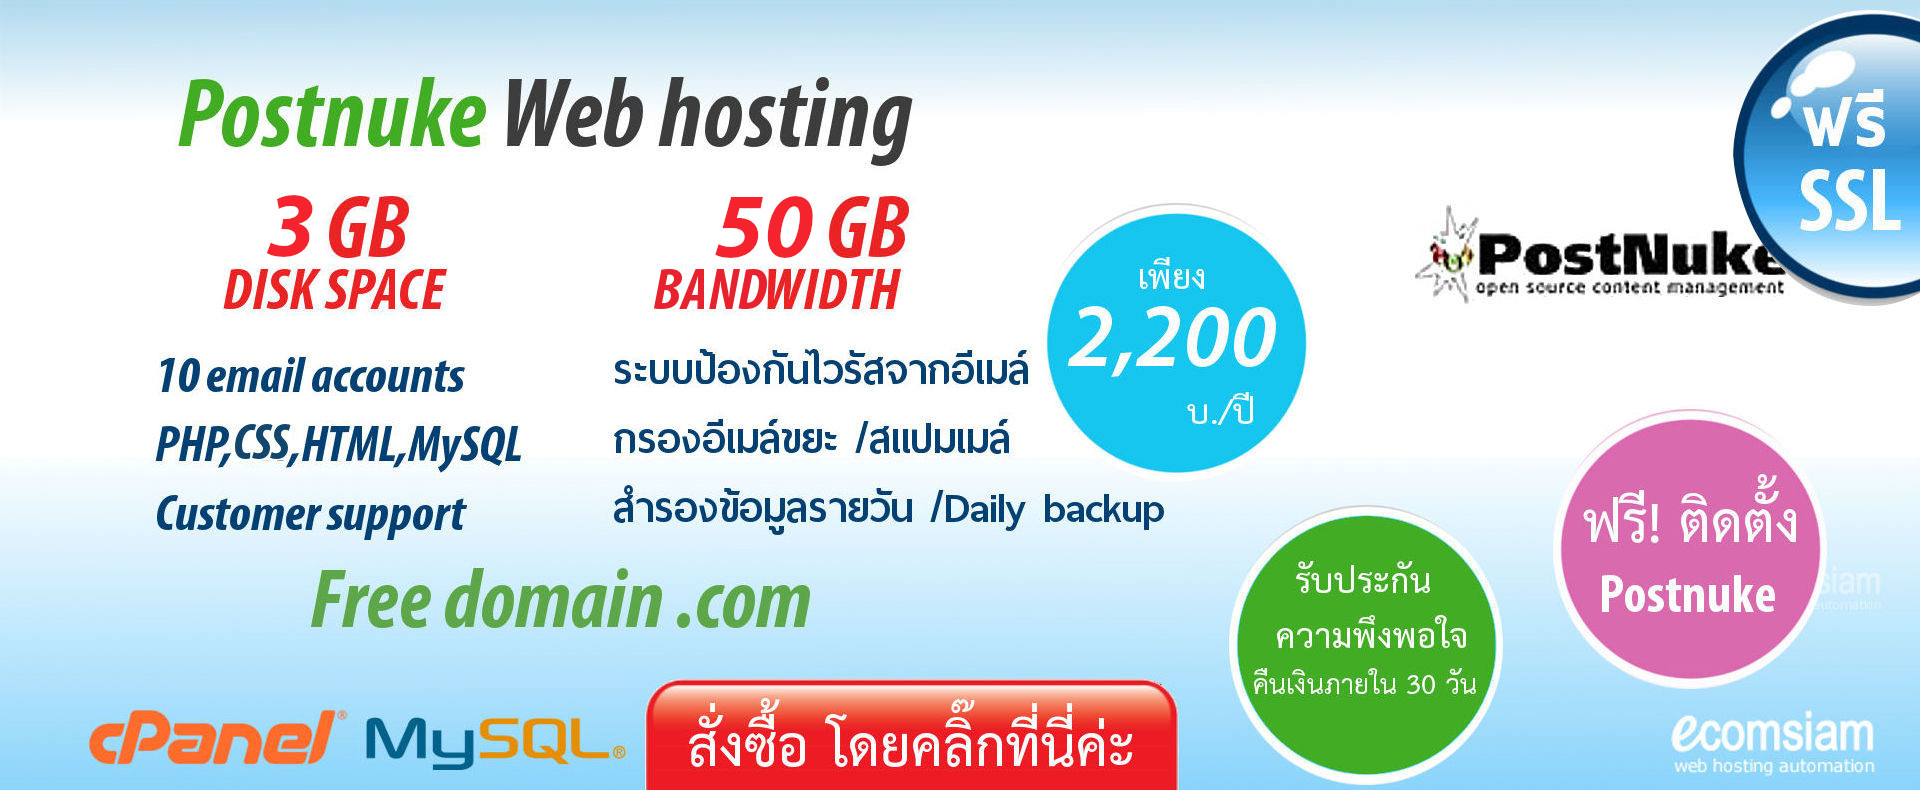 postnuke web hosting thailand -เว็บโฮสติ้ง ฟรีโดเมน ฟรี SSL - แนะนำ webhostthai web hosting thailand - Support ลูกค้า บริการดี ดูแลดี